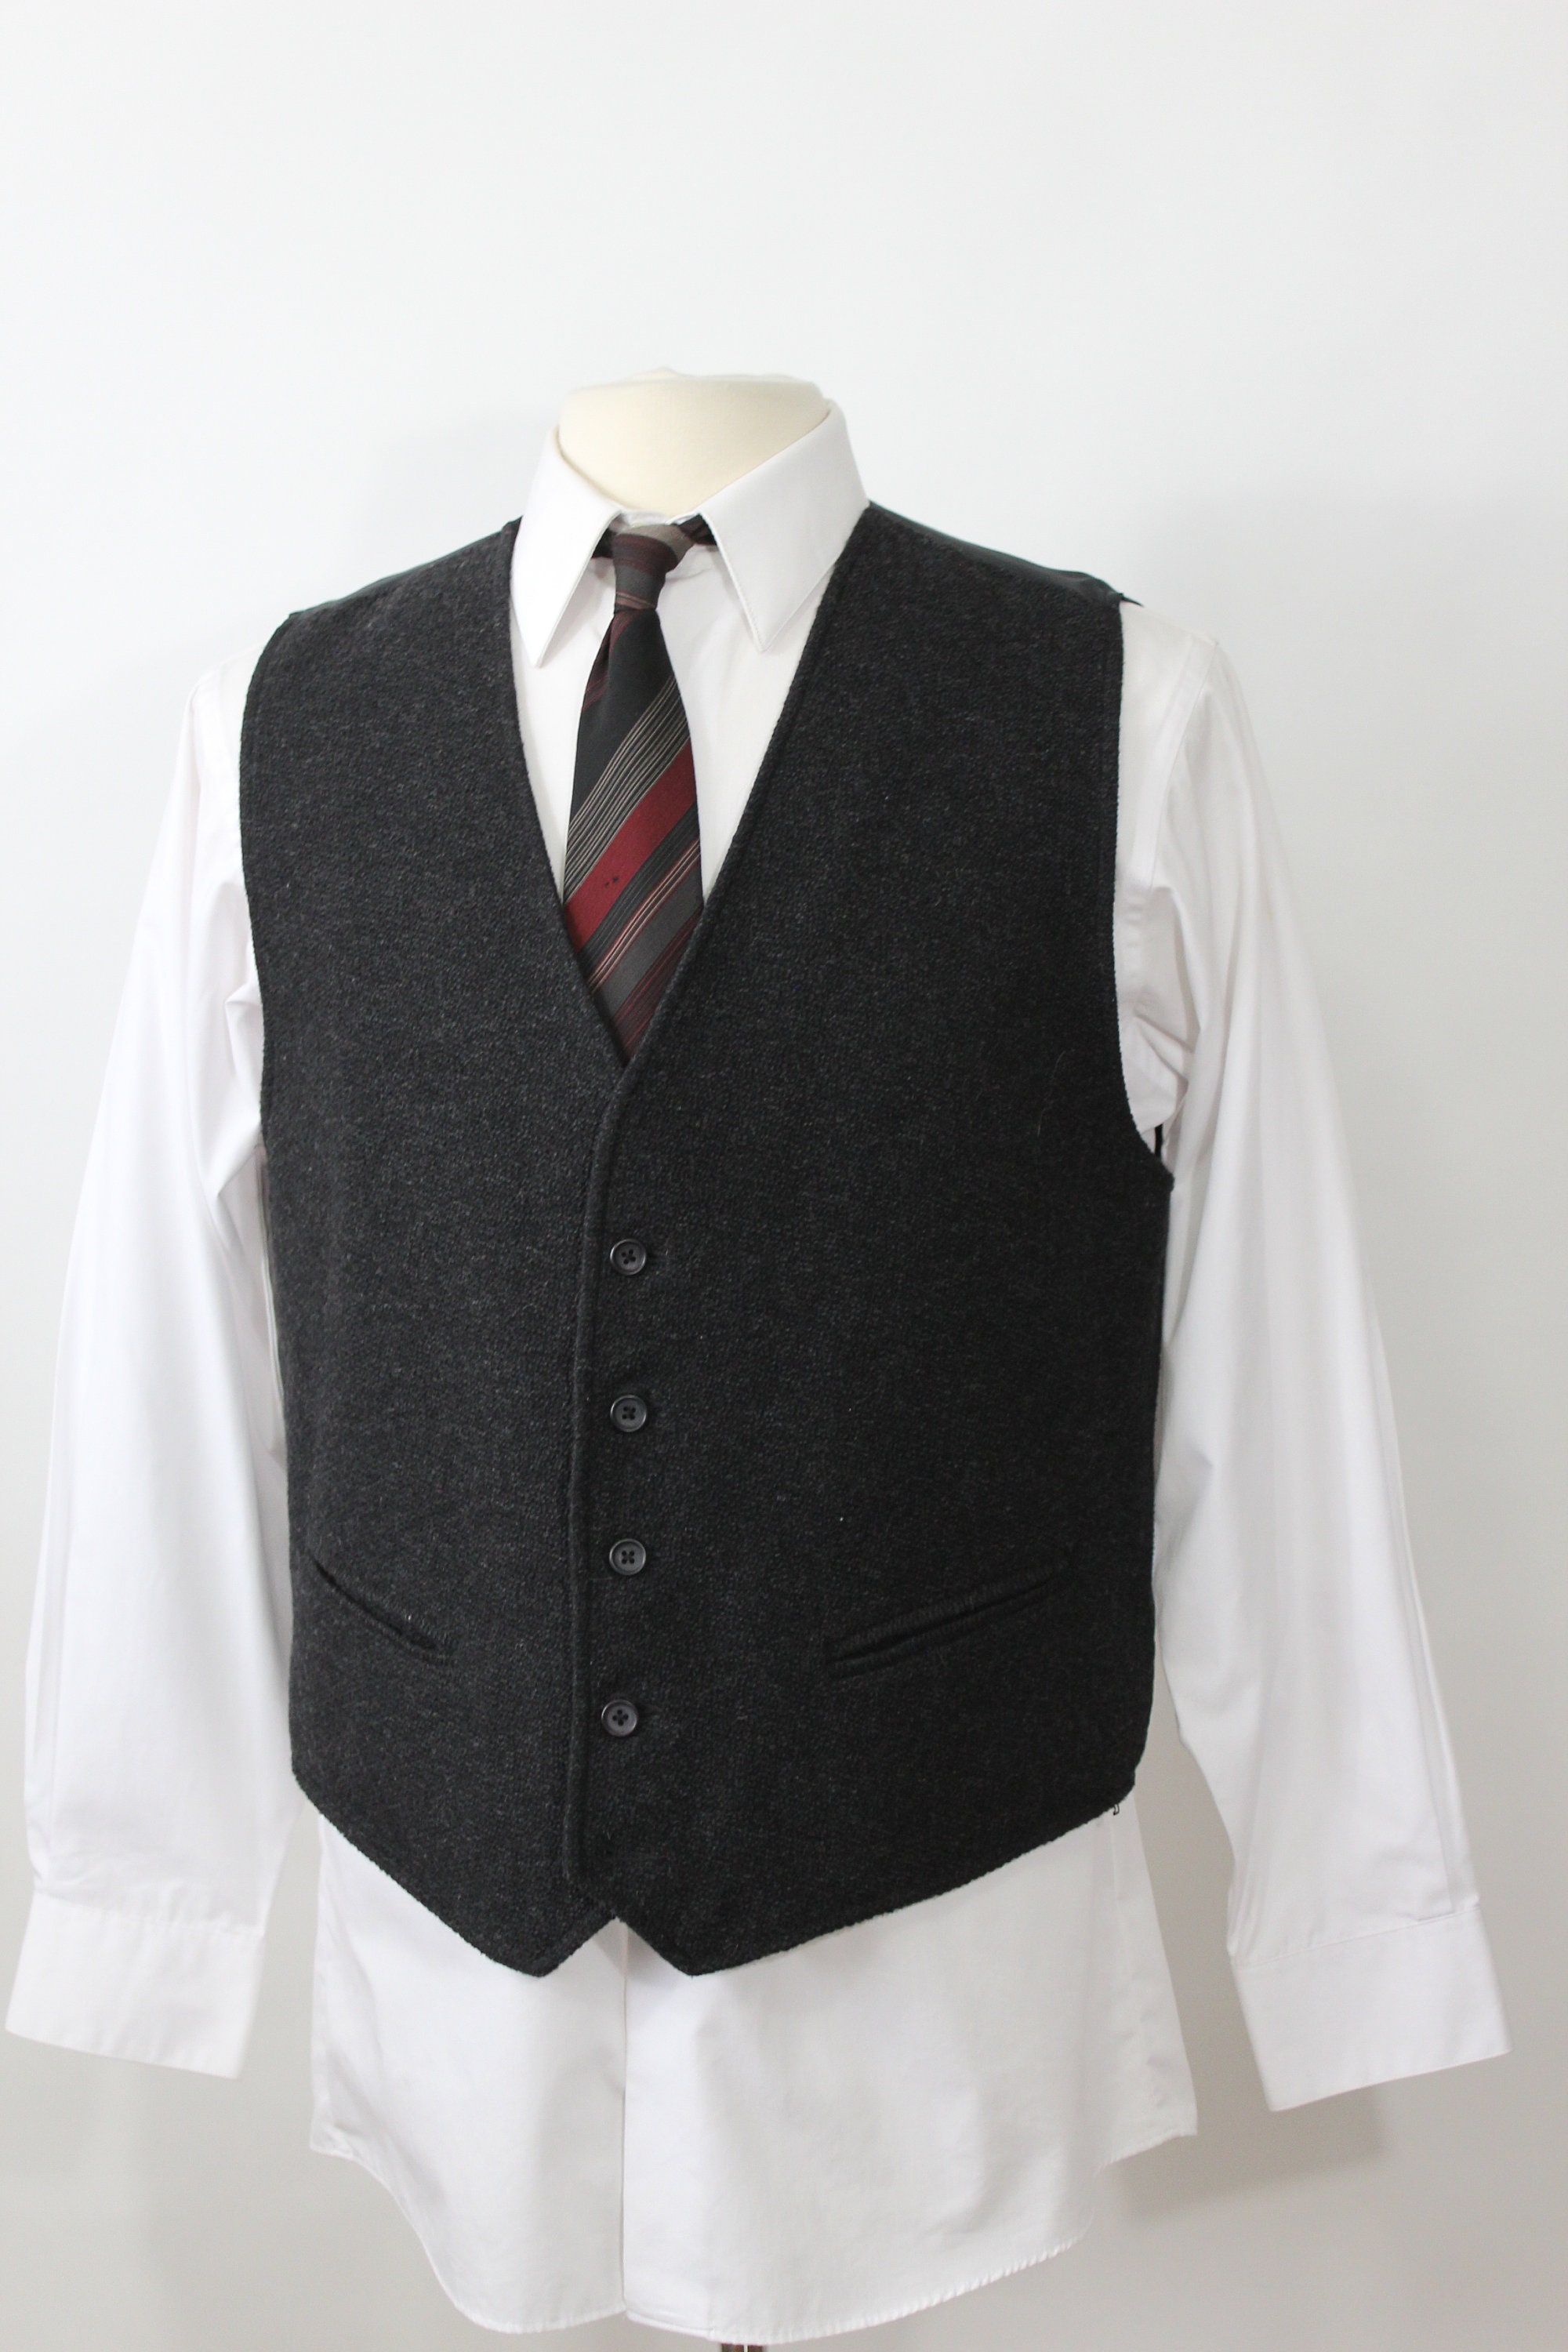 Mens Black Vest. Textured Wool Blend Vest. Suit Vest. Dress | Etsy